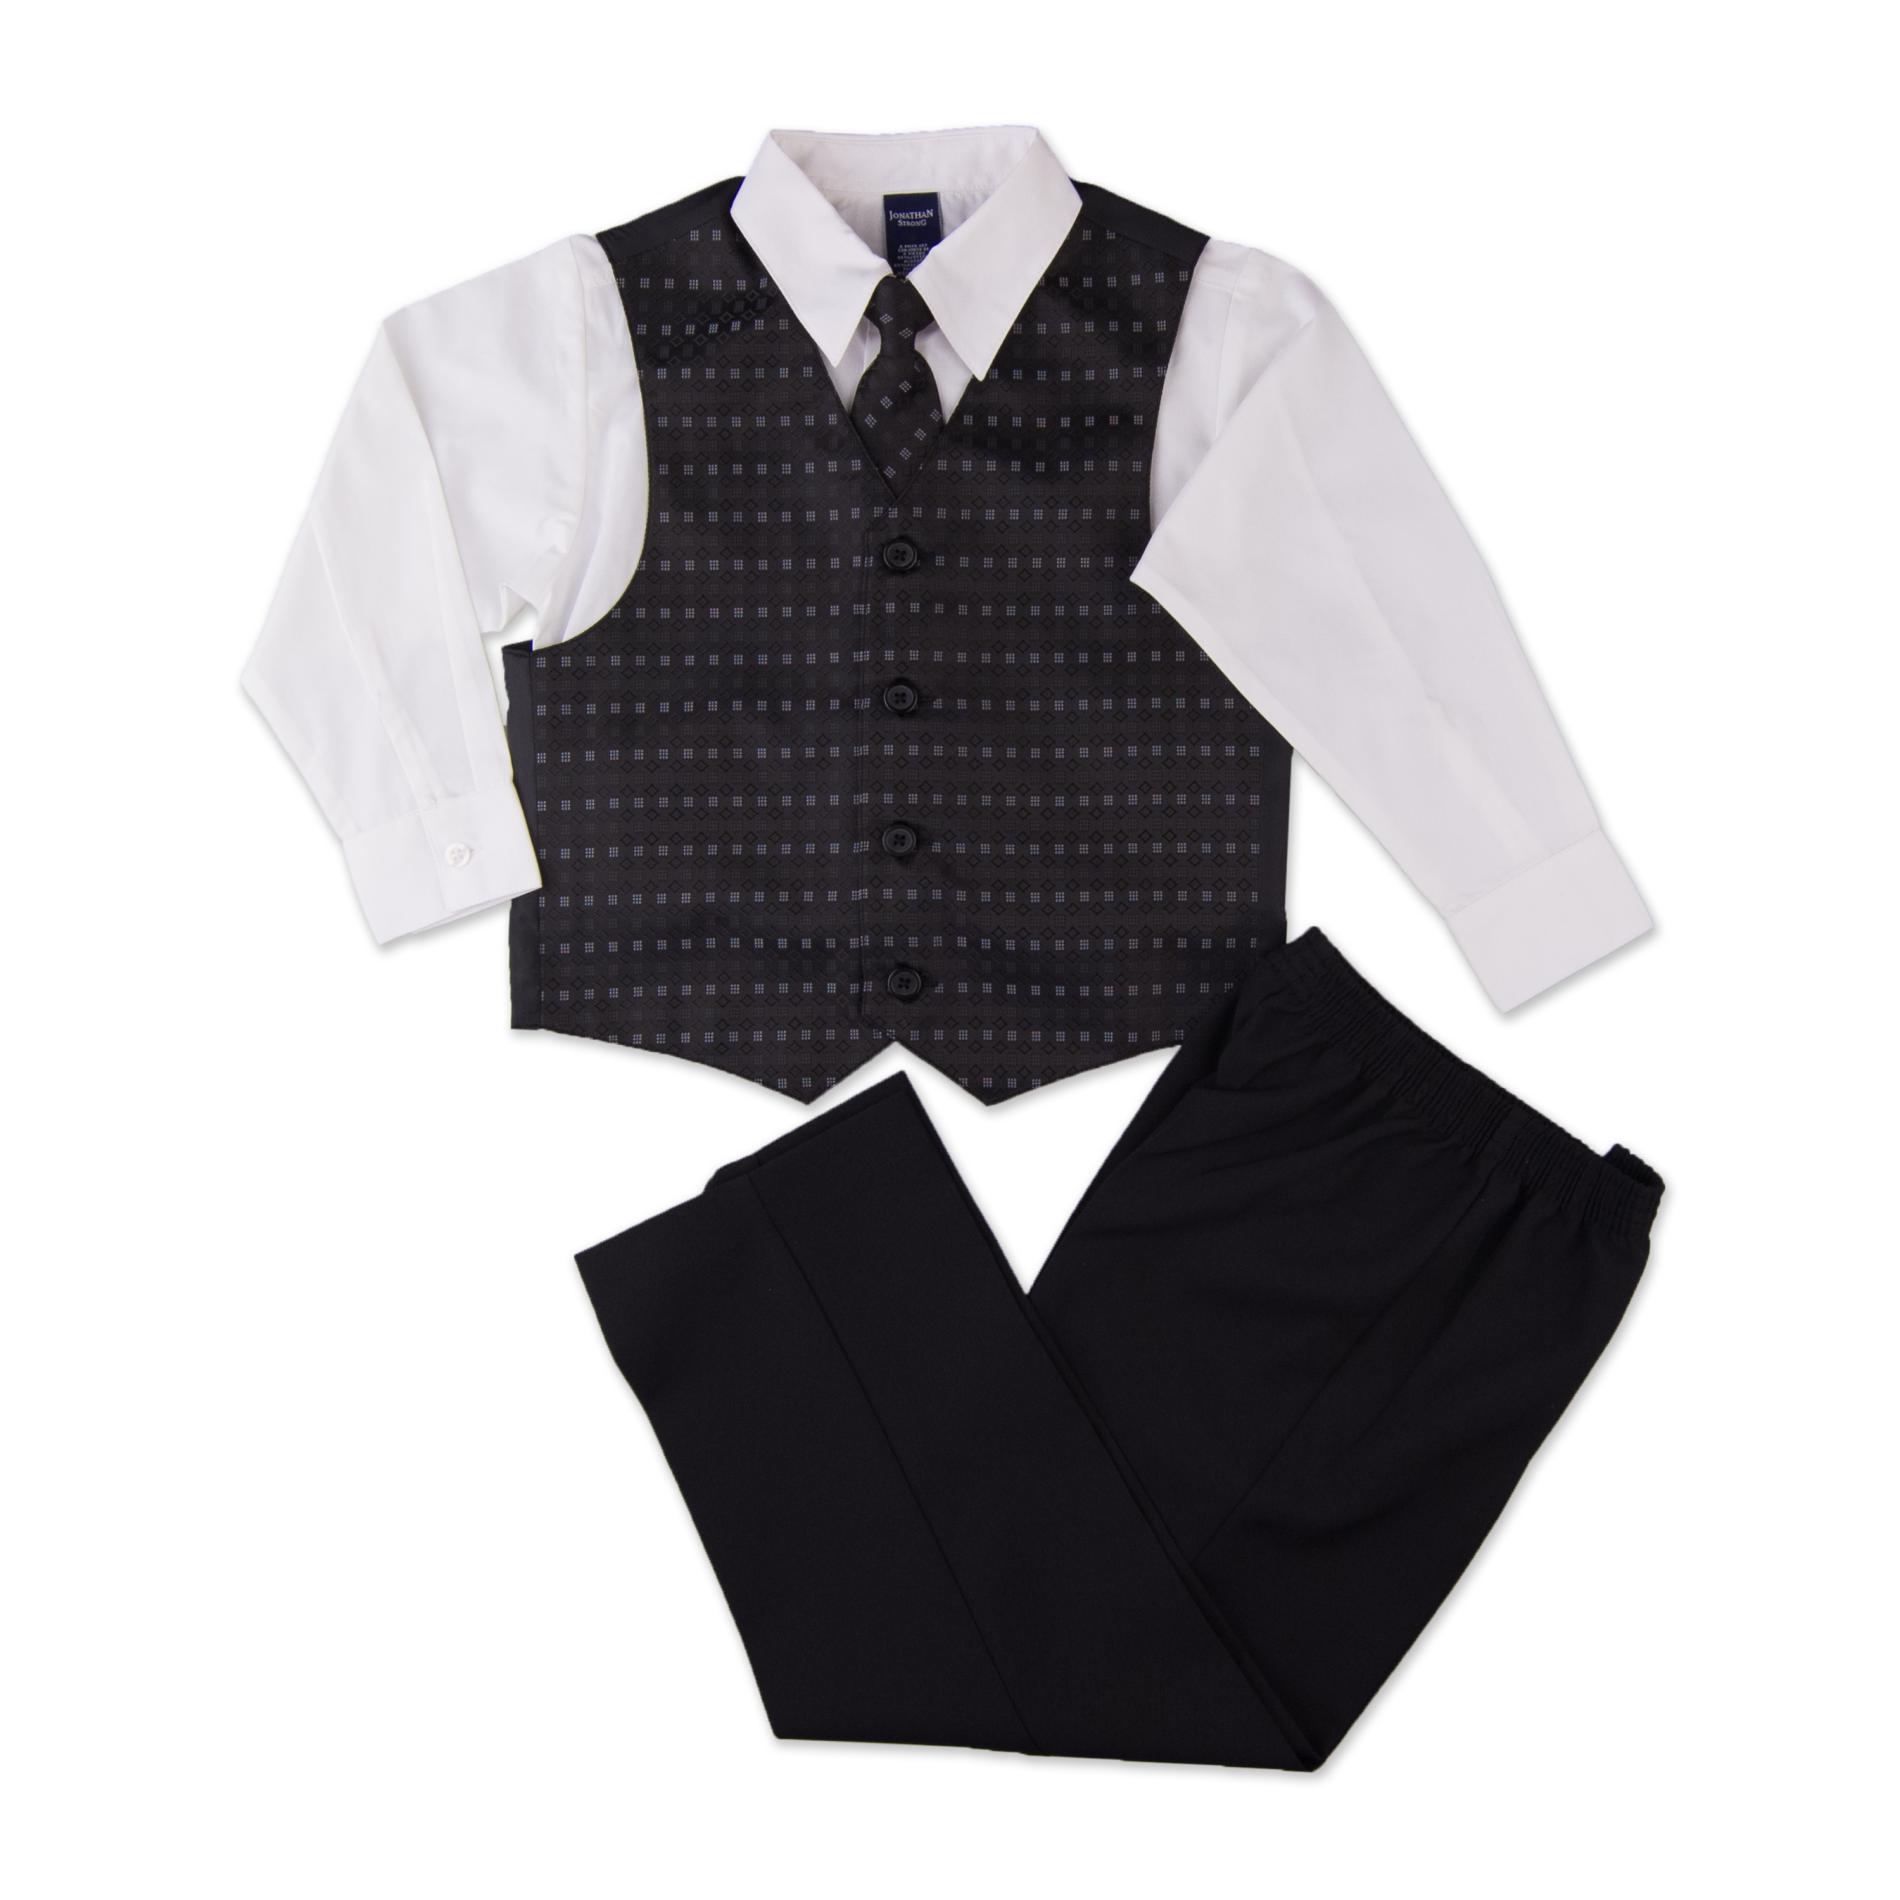 Jonathan Strong Infant & Toddler Boy's Dress Shirt  Necktie  Vest & Pants - Striped Dots